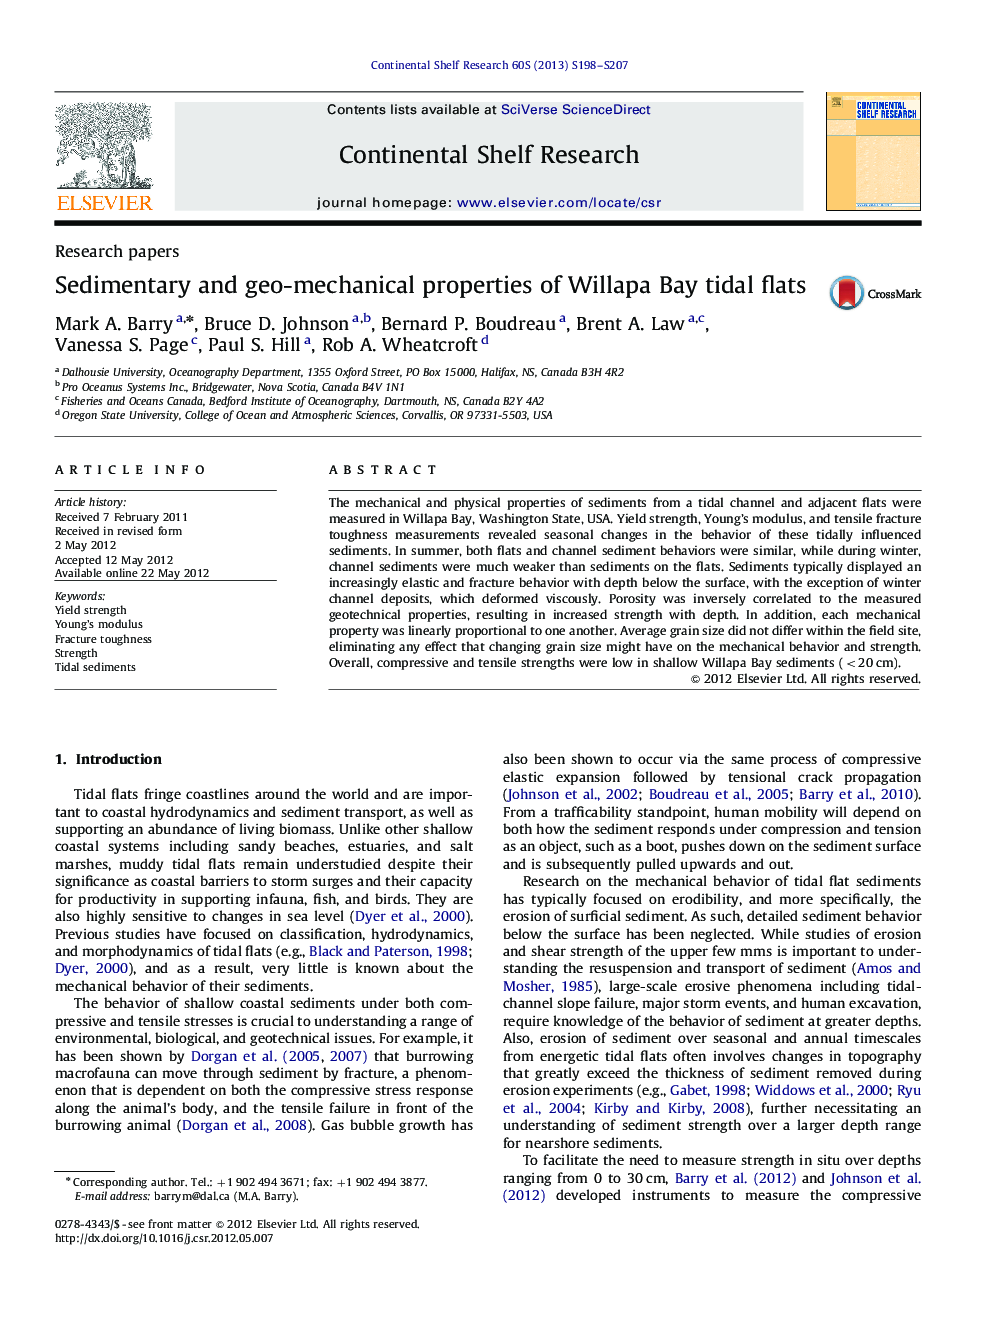 Sedimentary and geo-mechanical properties of Willapa Bay tidal flats